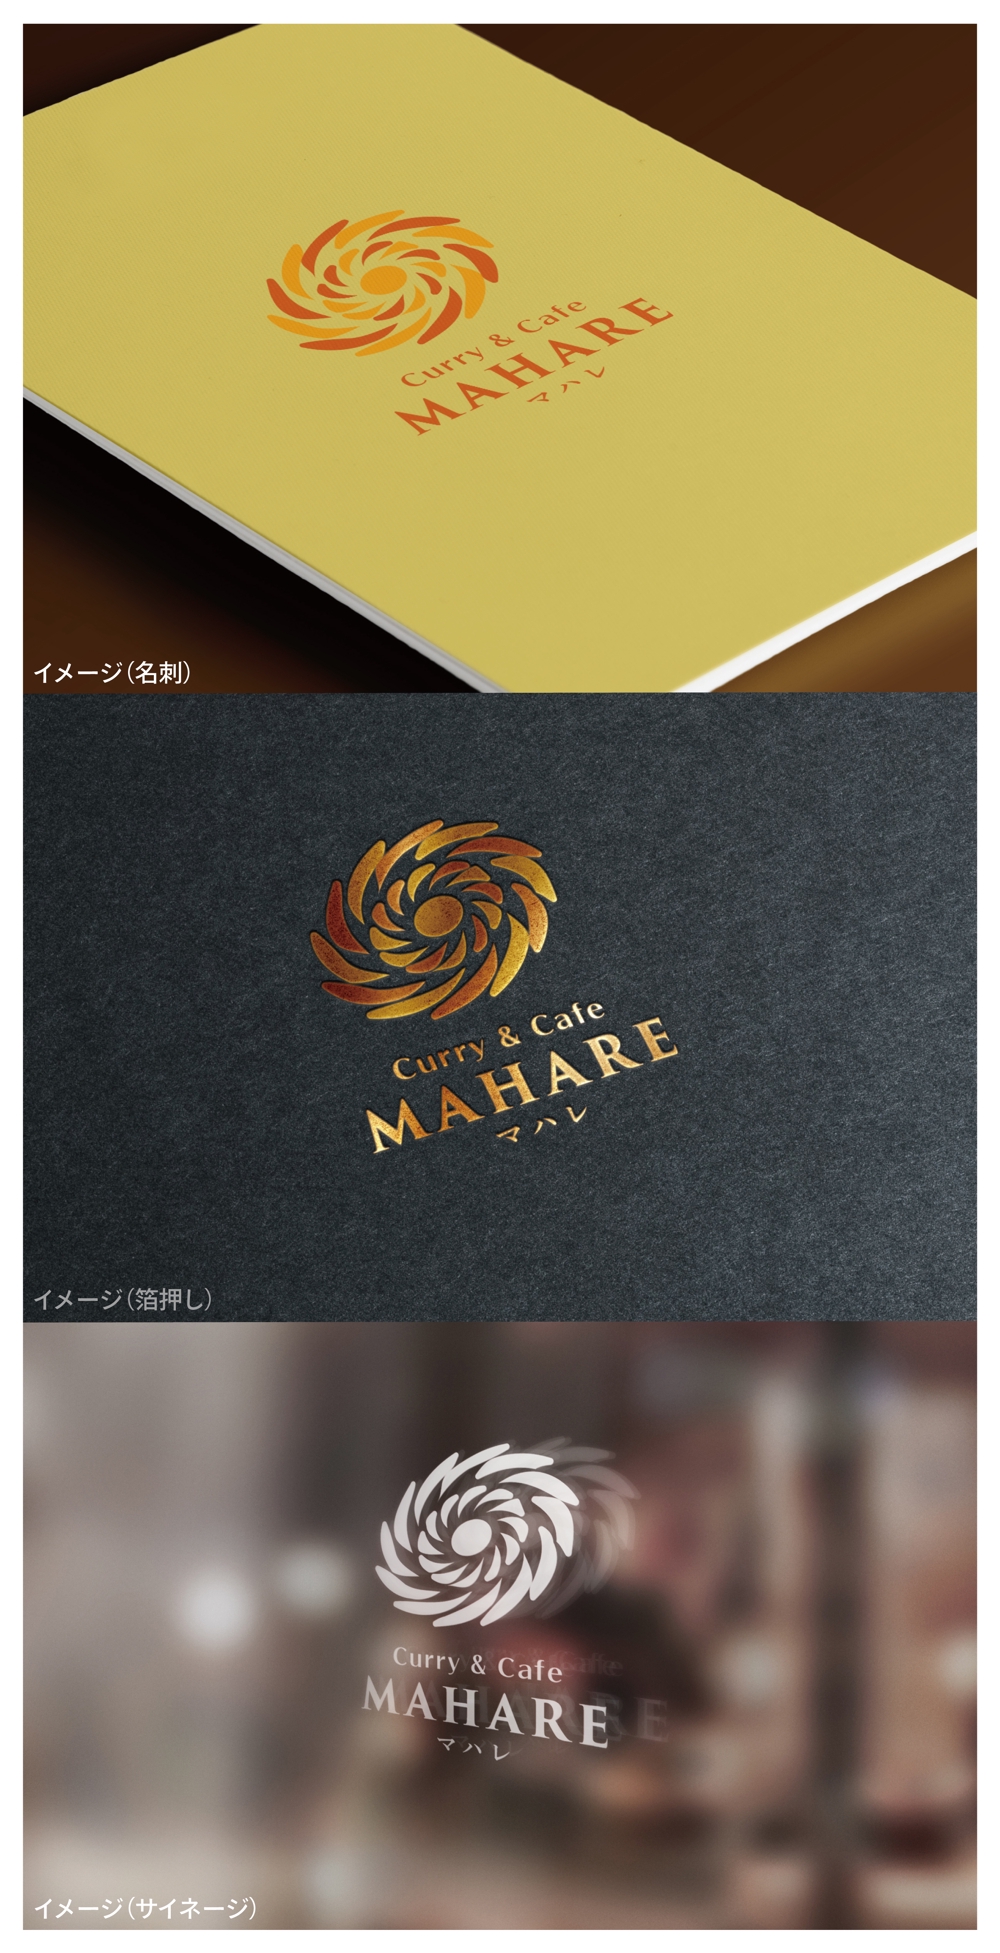 MAHARE_logo01_01.jpg